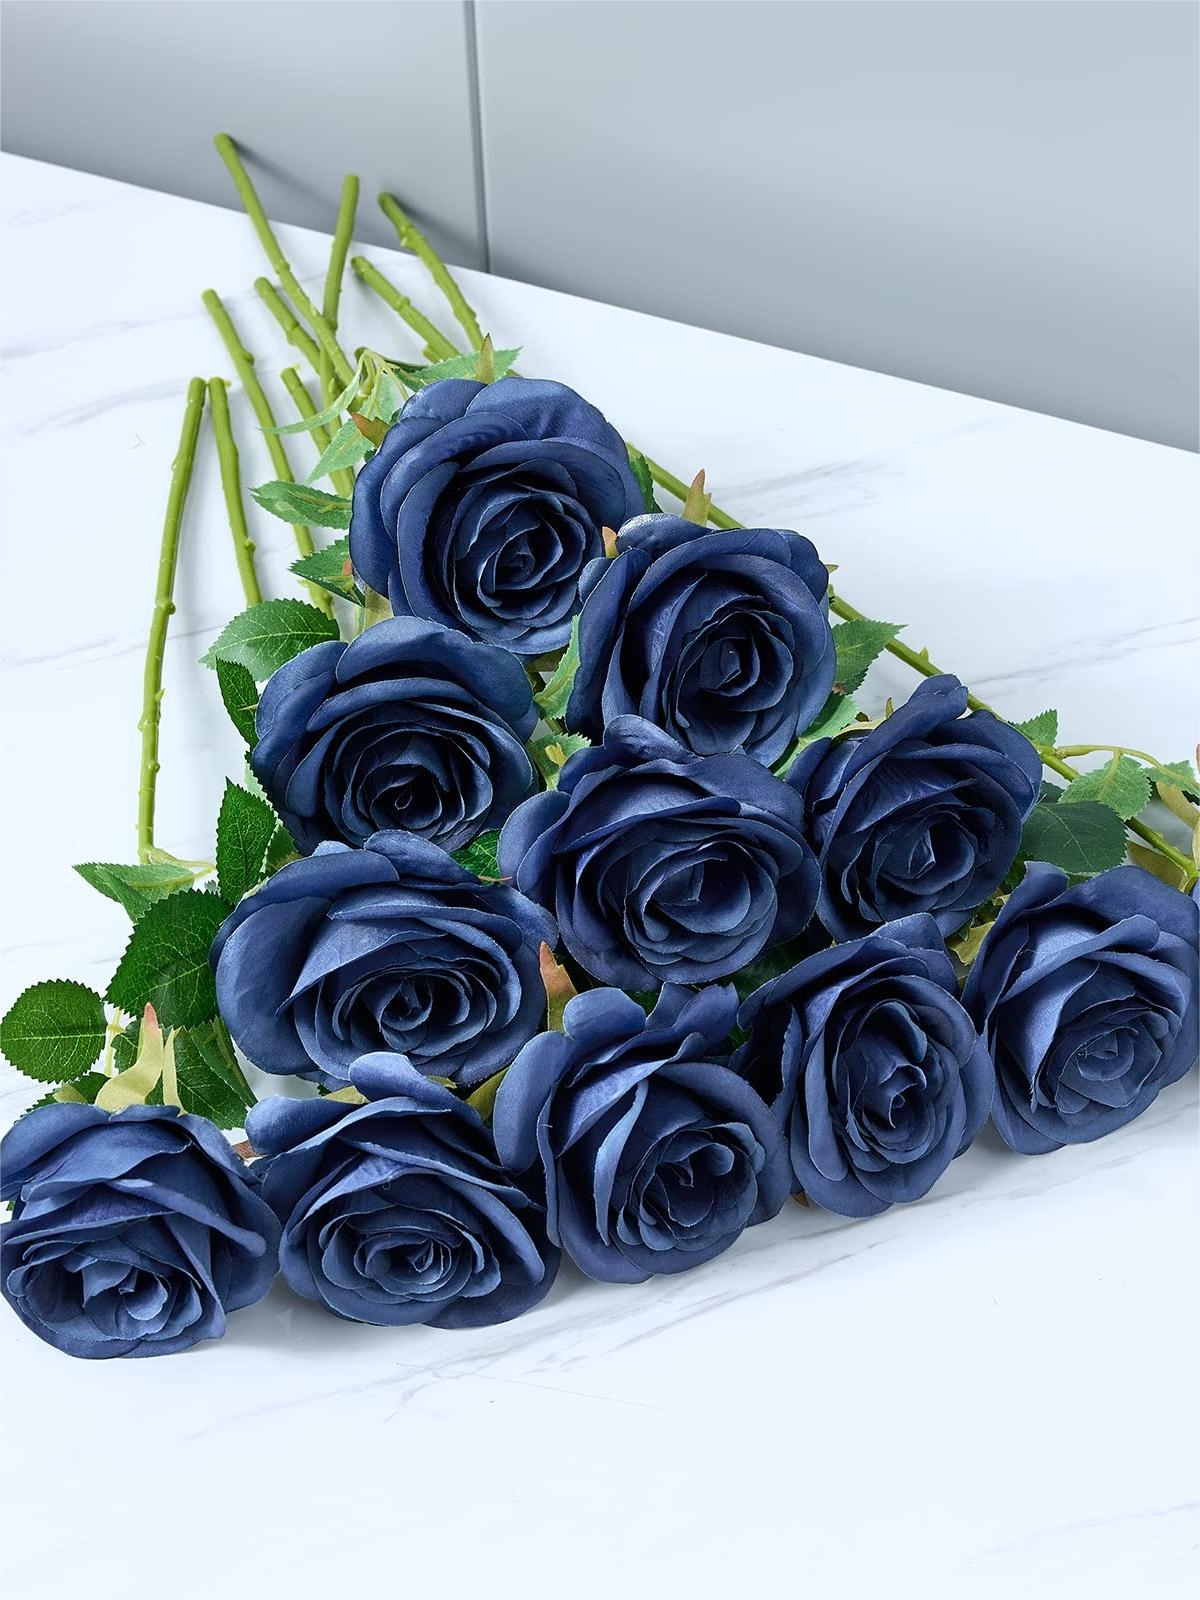 Royal Blue Artificial Rose Flowers With Long Stems Wedding Bouquet Centerpieces Decorations HH8039